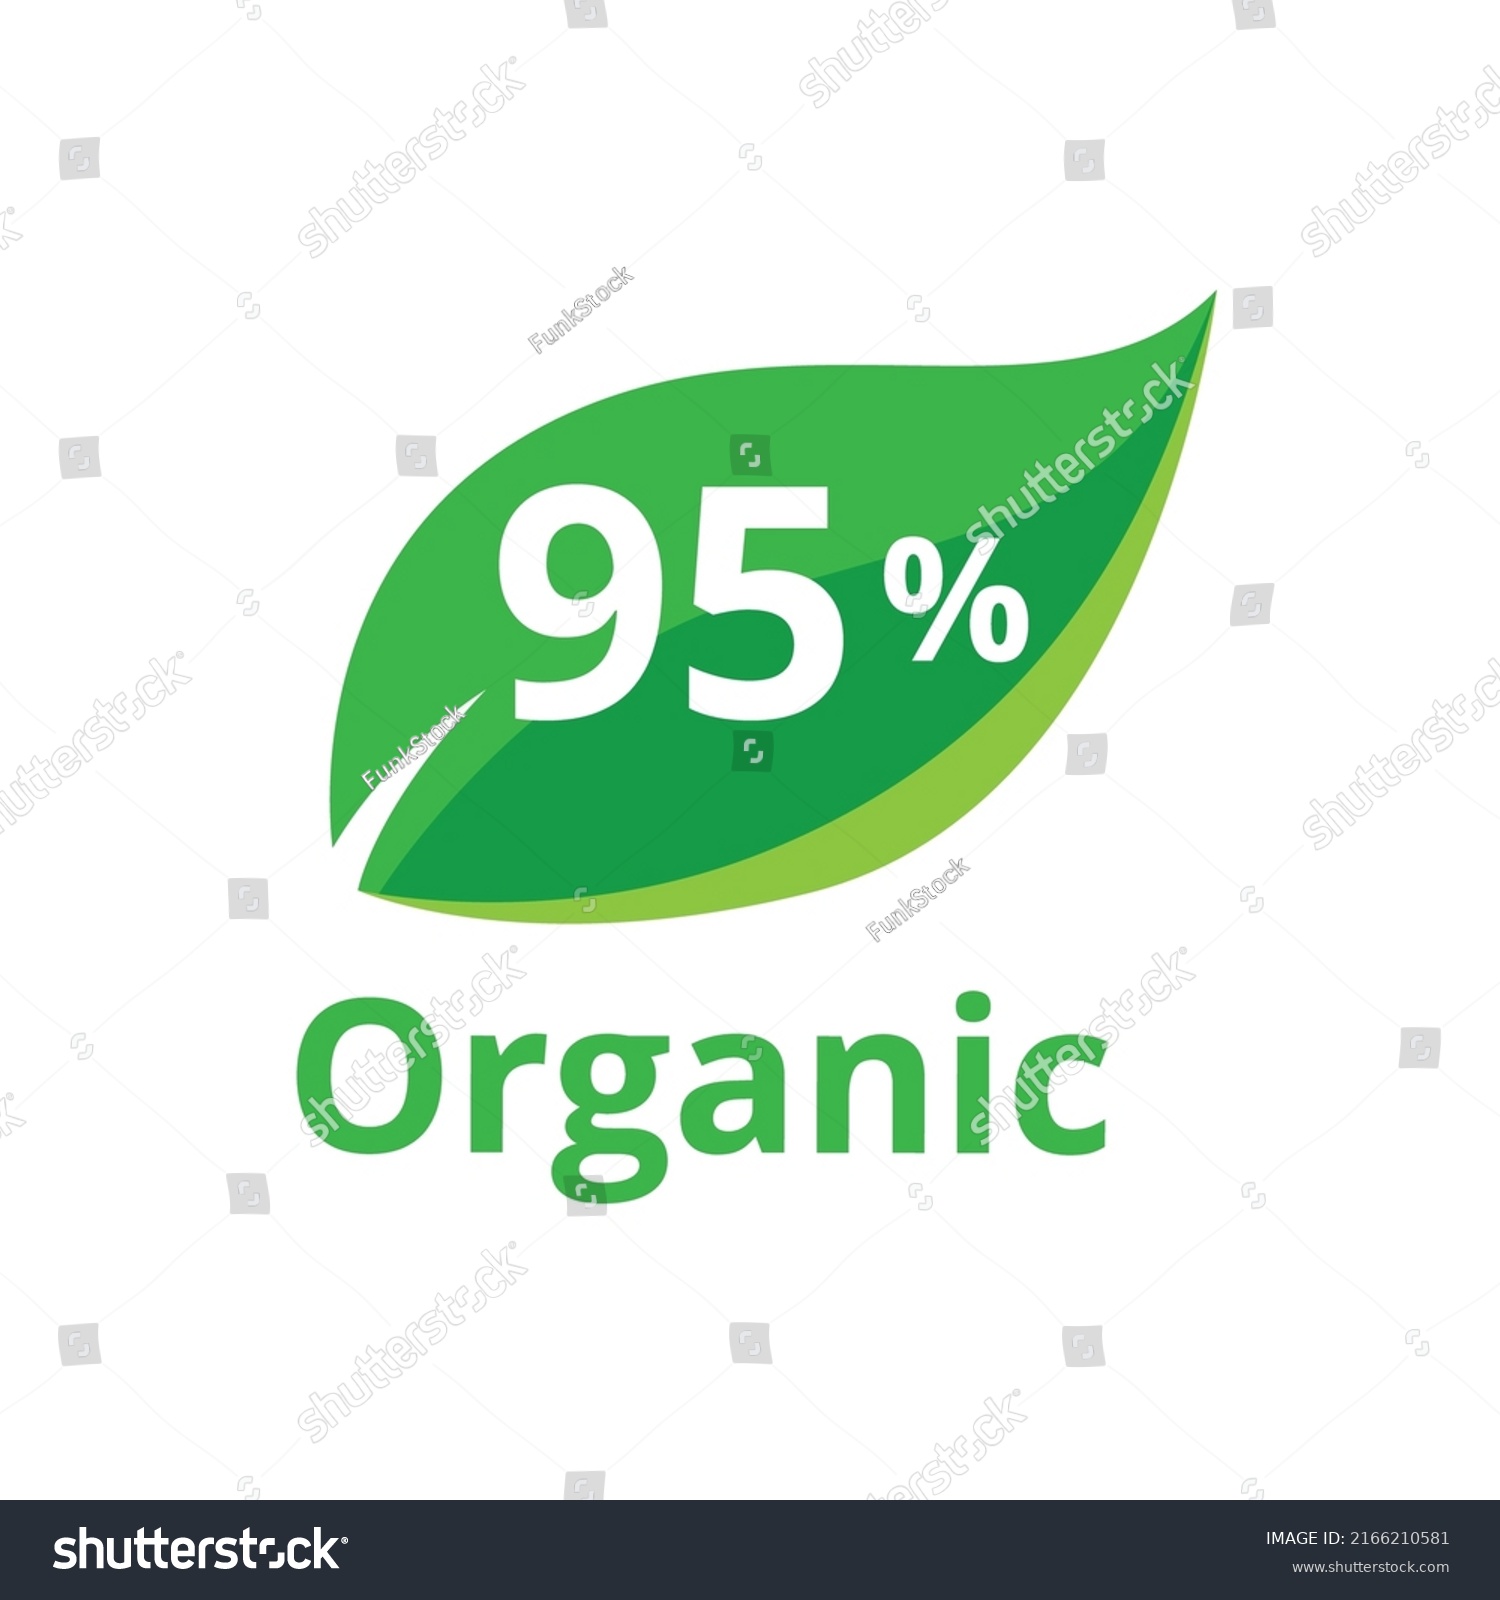 SVG of 95% percentage organic product leaf shape vector art illustration with fantastic graphic svg